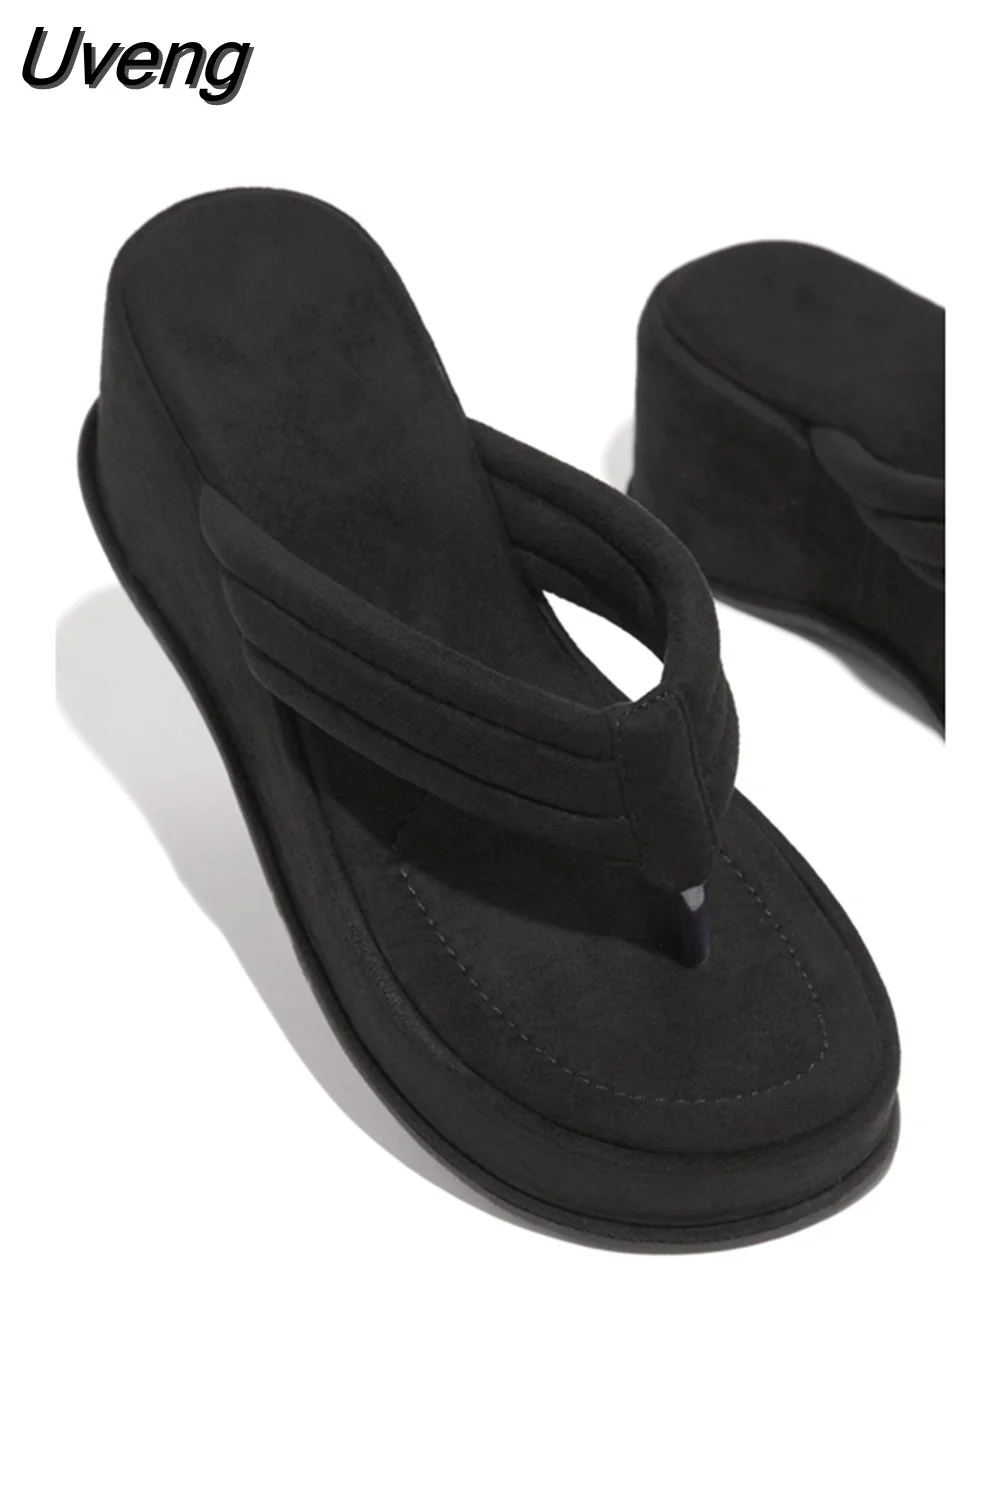 Uveng Wedges Sandals Summer Solid Color Casual Clip Toe Flip Flops Women Platform Slipper Beach Sandals Light Comfort Shoes 2023 430-0